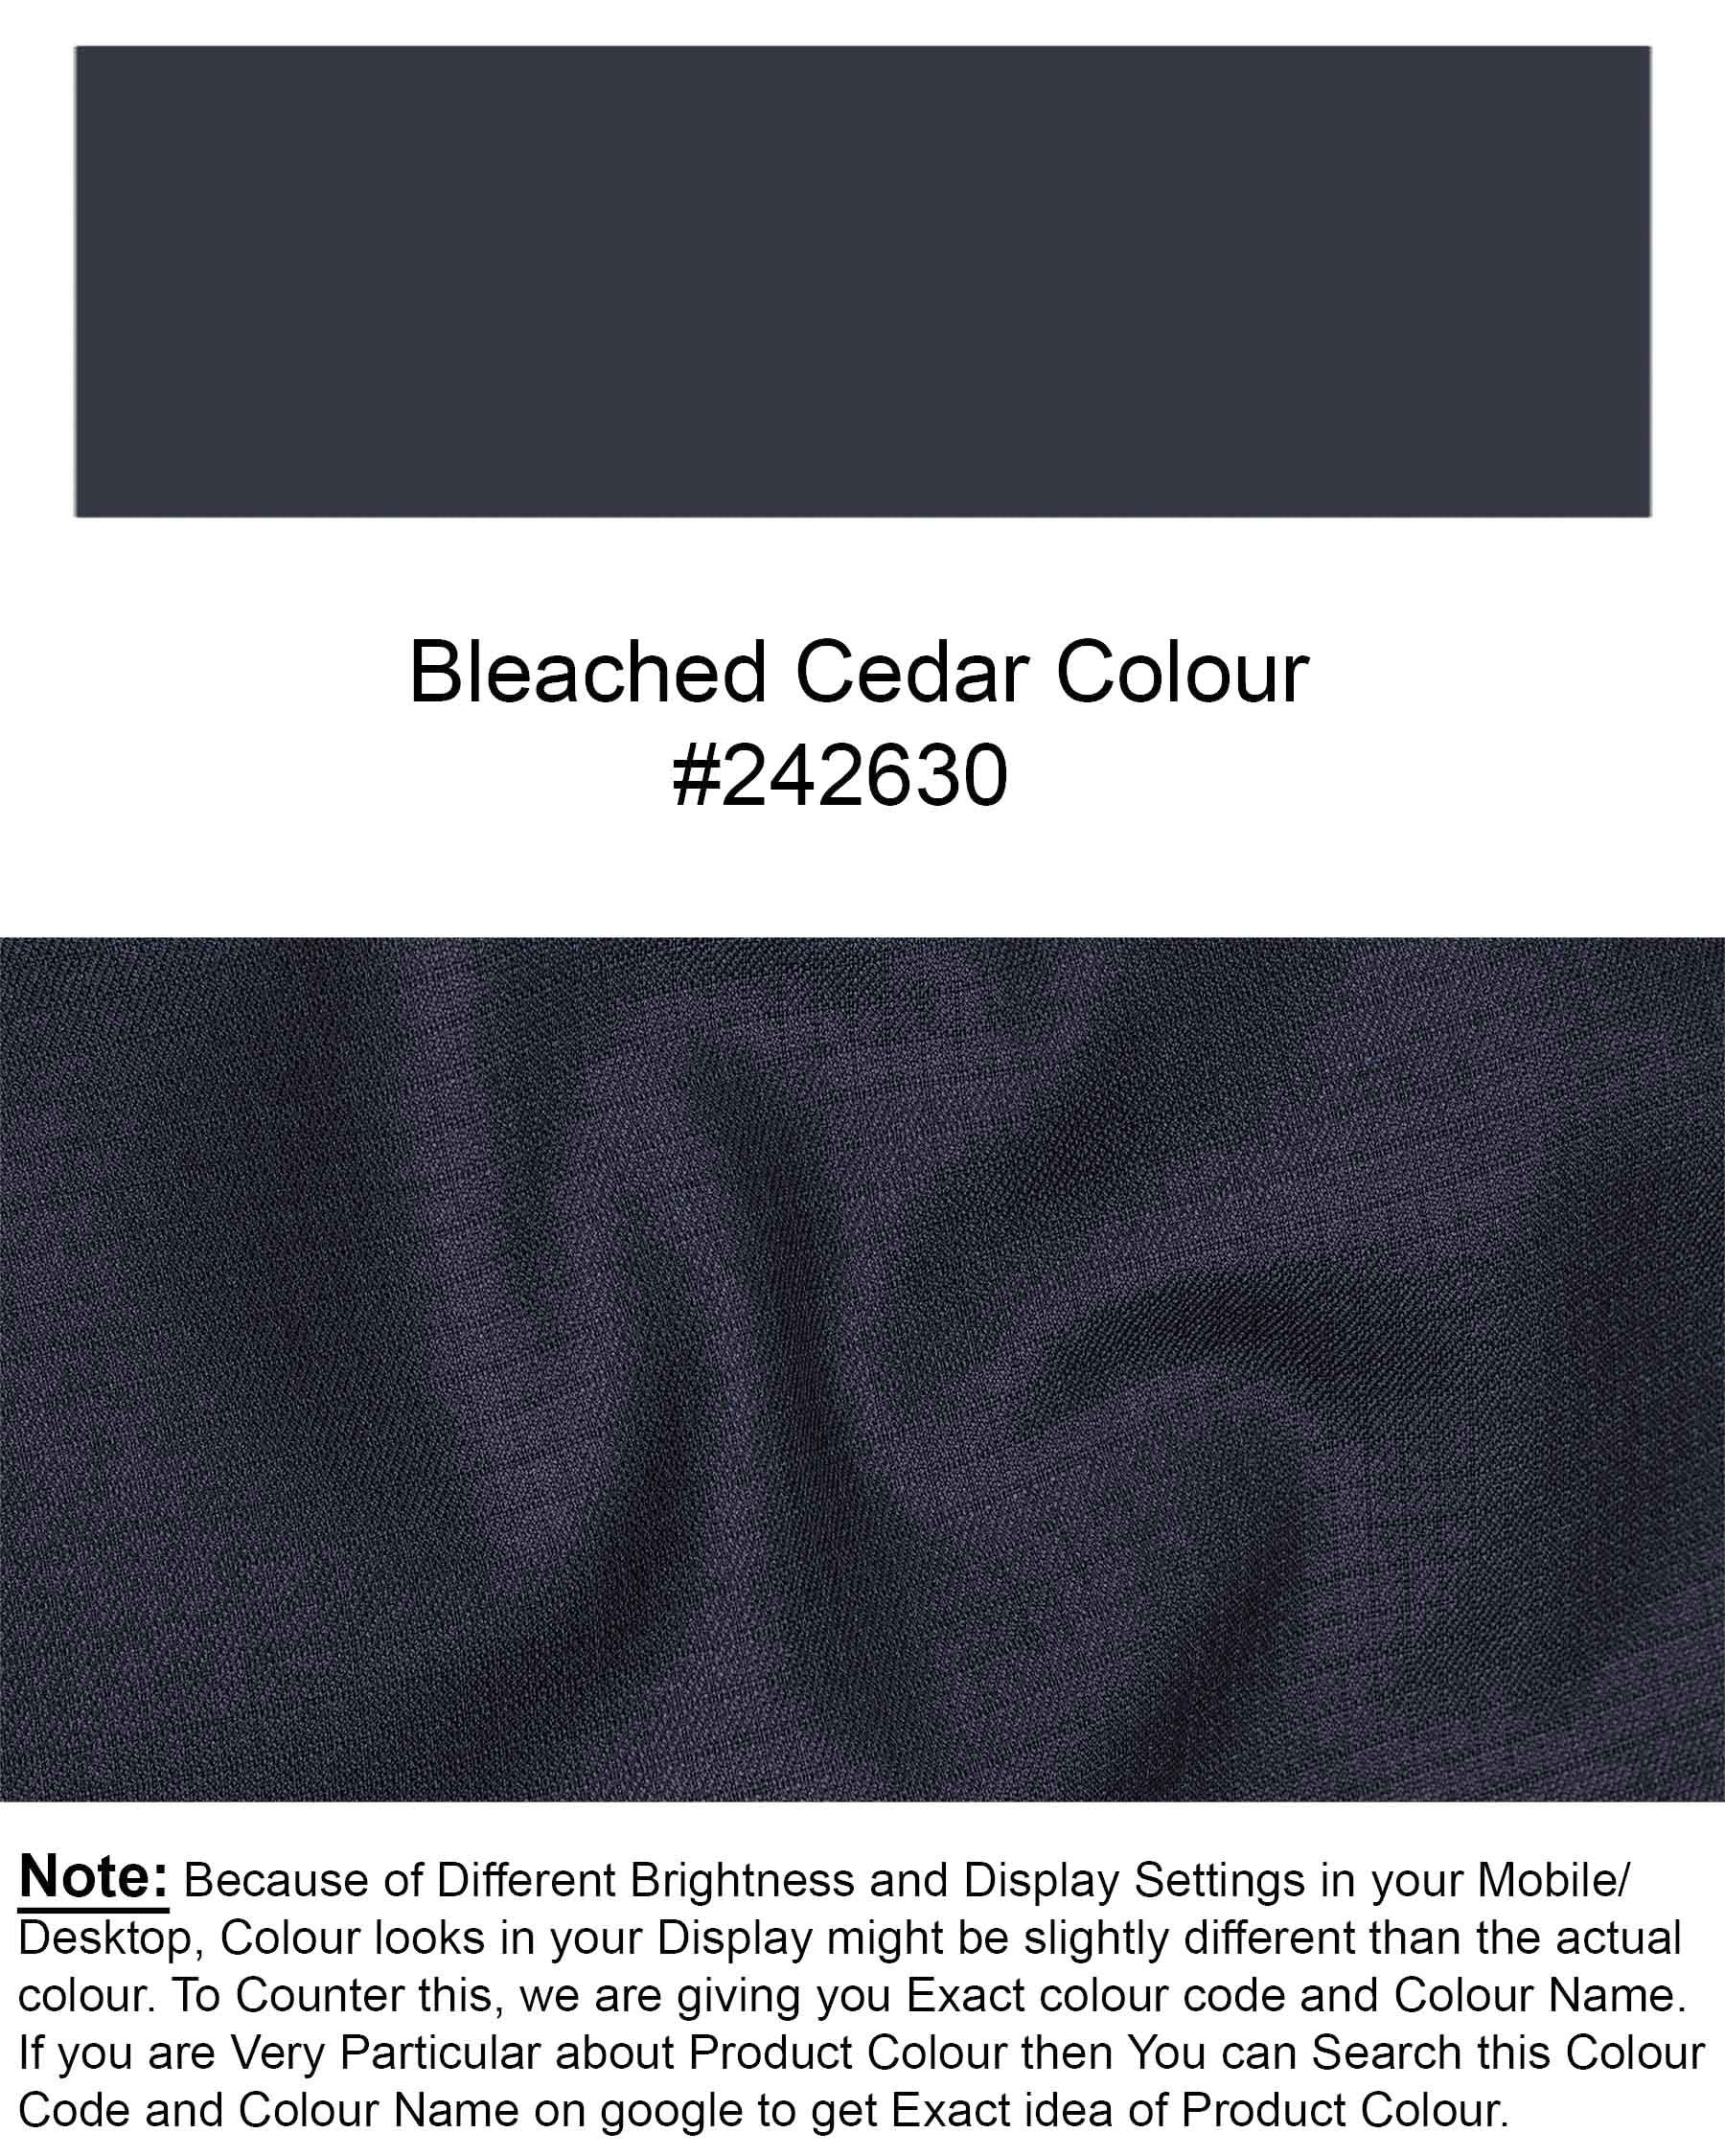 Bleached Cedar Blue Double Breasted Blazer BL1923-DB-36,BL1923-DB-38,BL1923-DB-40,BL1923-DB-42,BL1923-DB-44,BL1923-DB-46,BL1923-DB-48,BL1923-DB-50,BL1923-DB-52,BL1923-DB-54,BL1923-DB-56,BL1923-DB-58,BL1923-DB-60